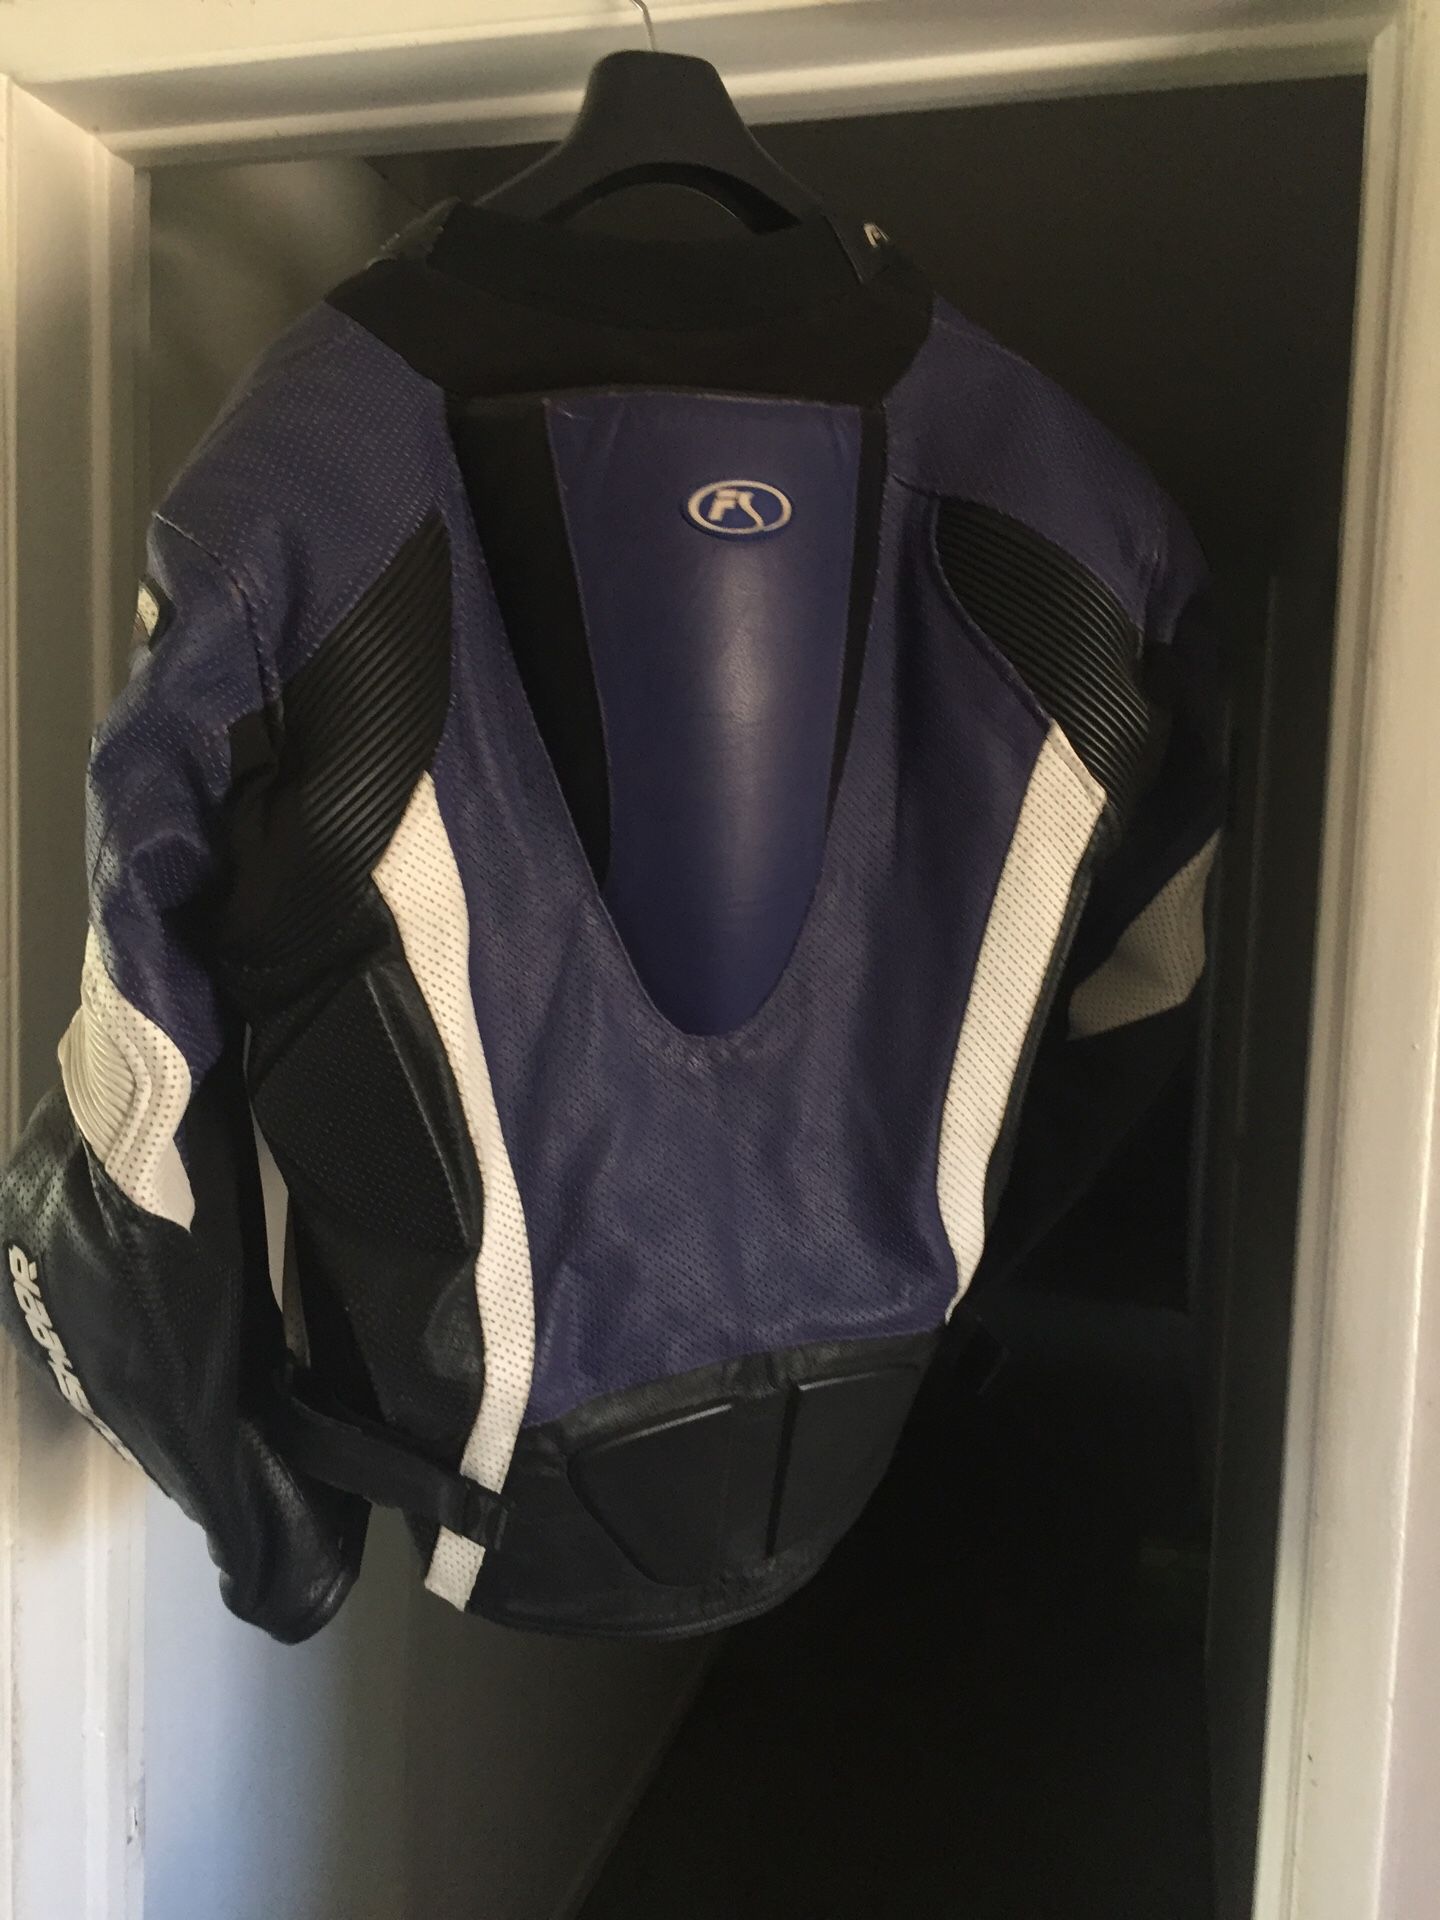 100 Dang Motorcycle jacket men’s FieldSheer advanced motorcycle racing gear a AR9 size 44